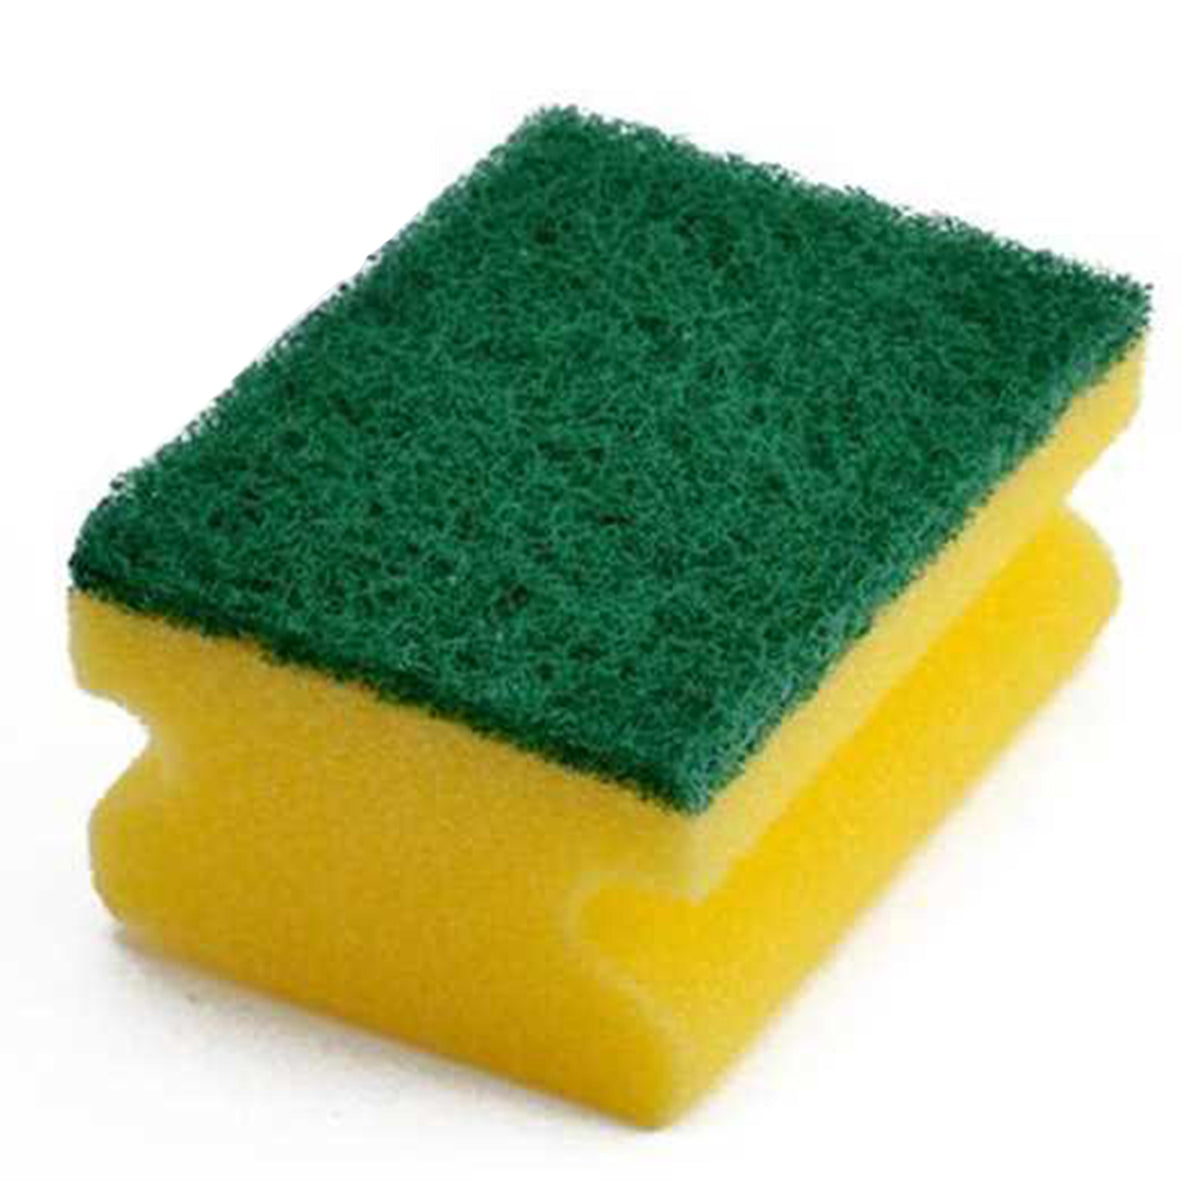 Synthetic Sponge ScourerA practical synthetic sponge scourer.